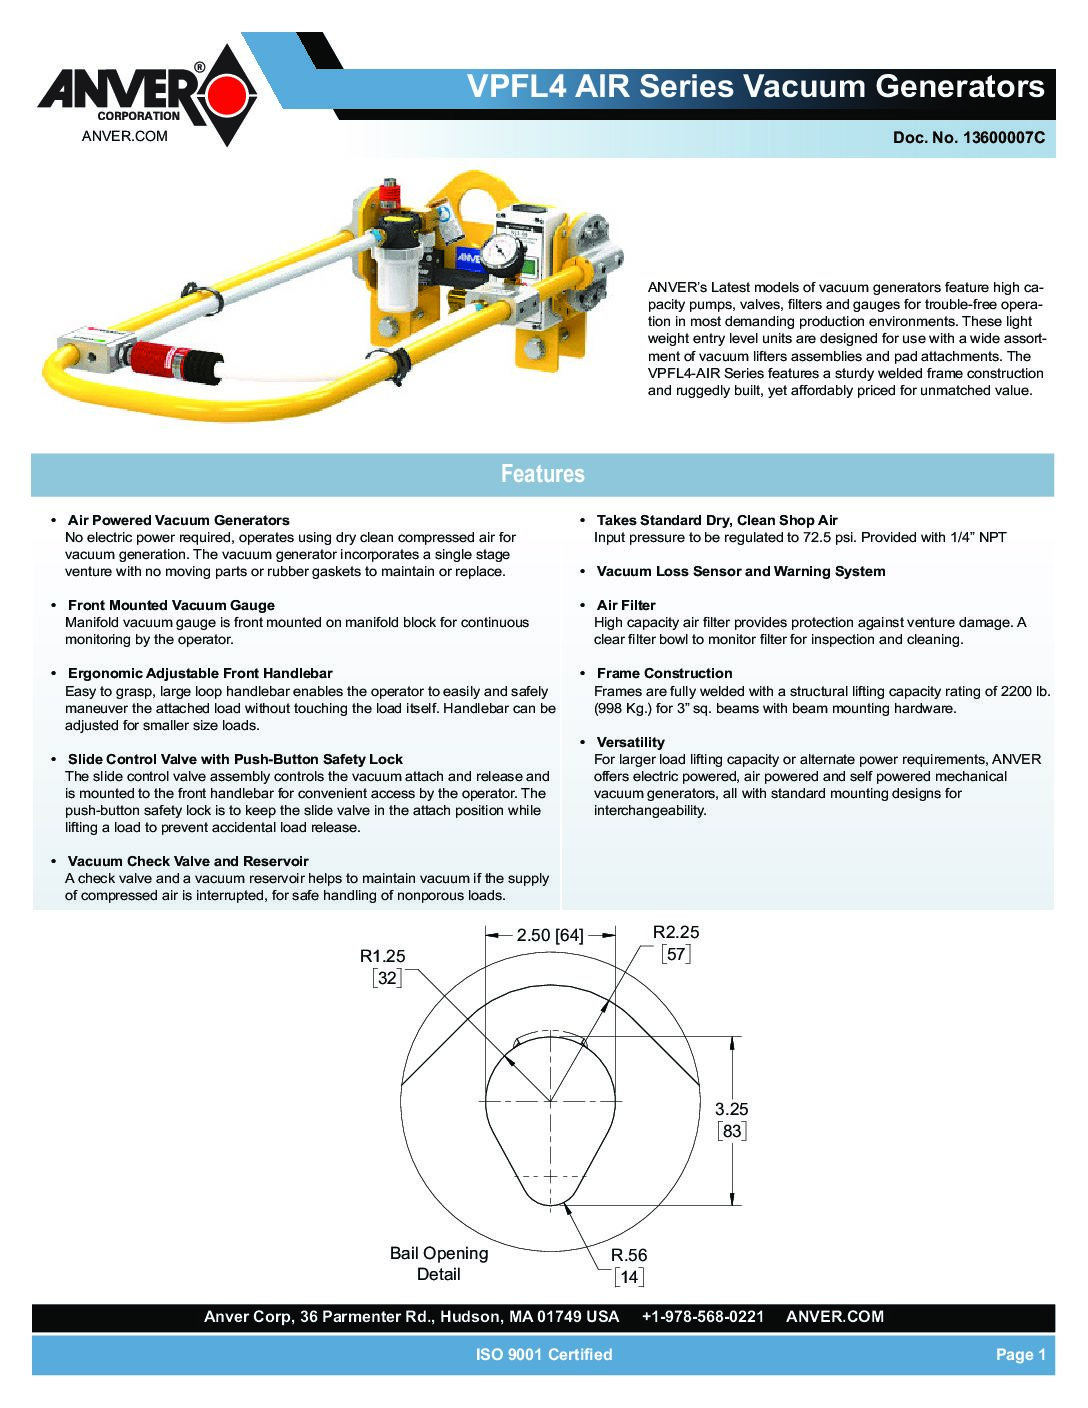 Anver Air Powered Vacuum Generator VPFL4 Spread Sheet pdf